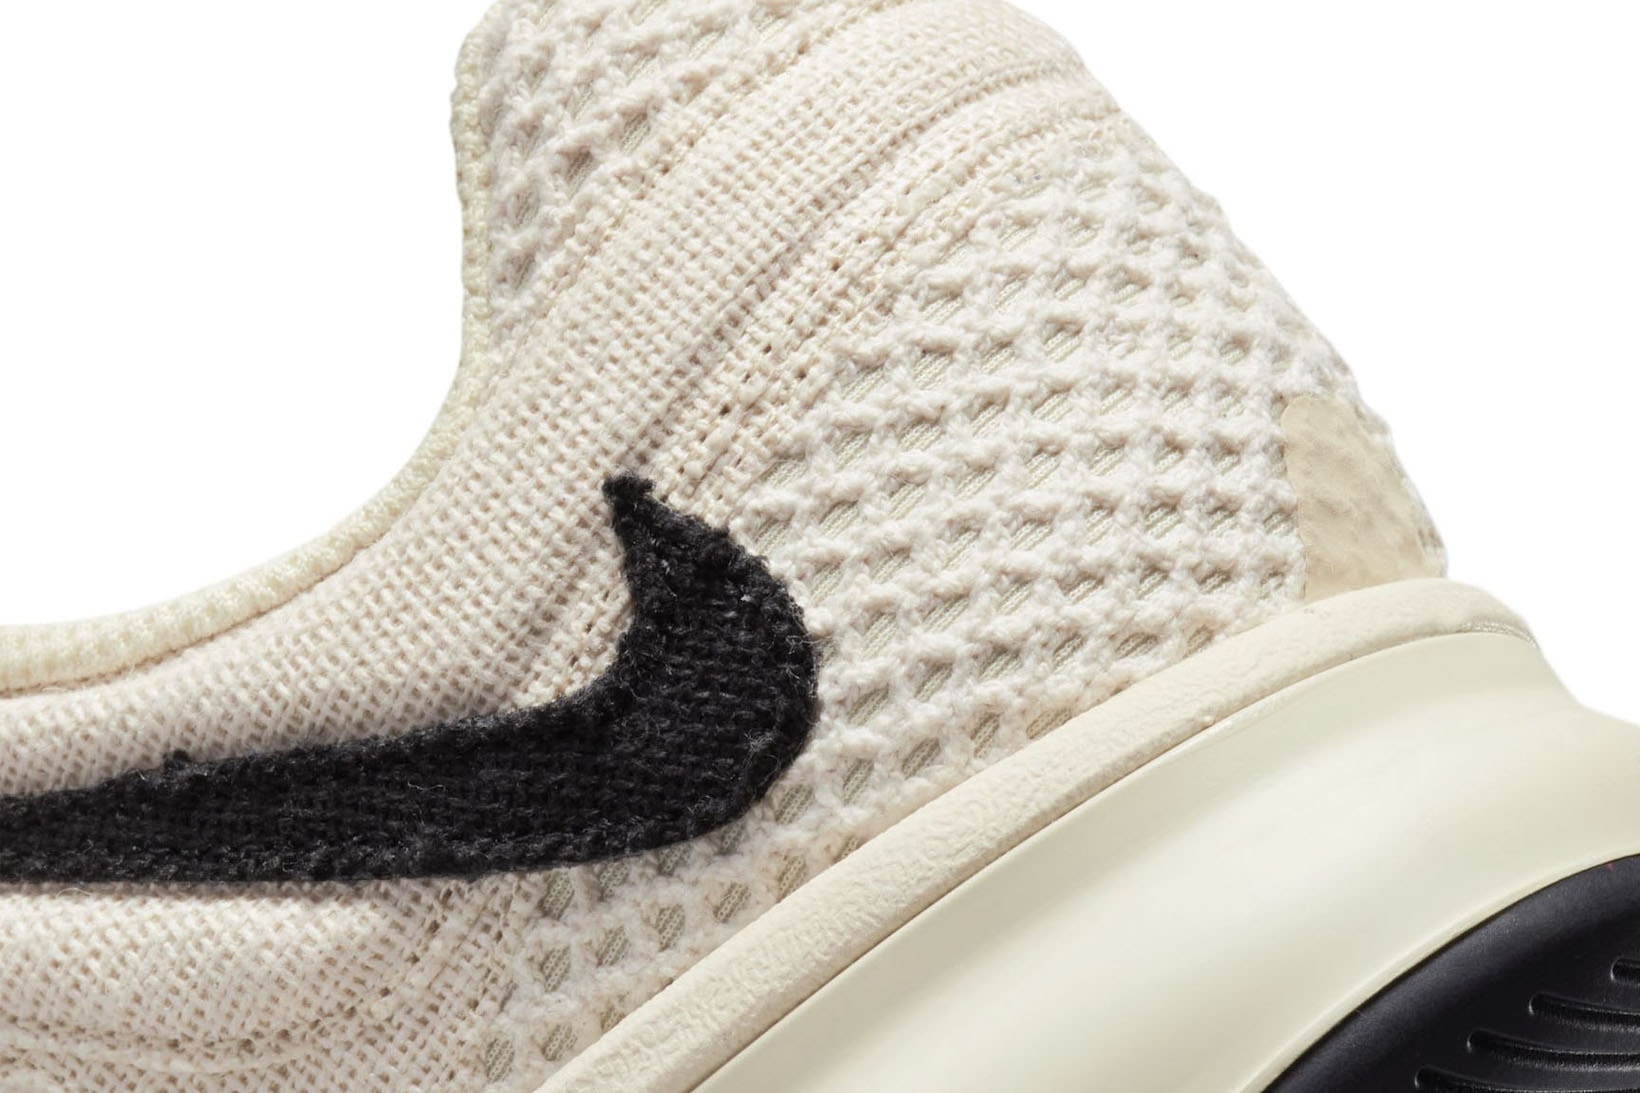 Stussy Nike Air Max 2015 Fossil Cream Black Colorway Collaboration Sneakers Footwear Kicks